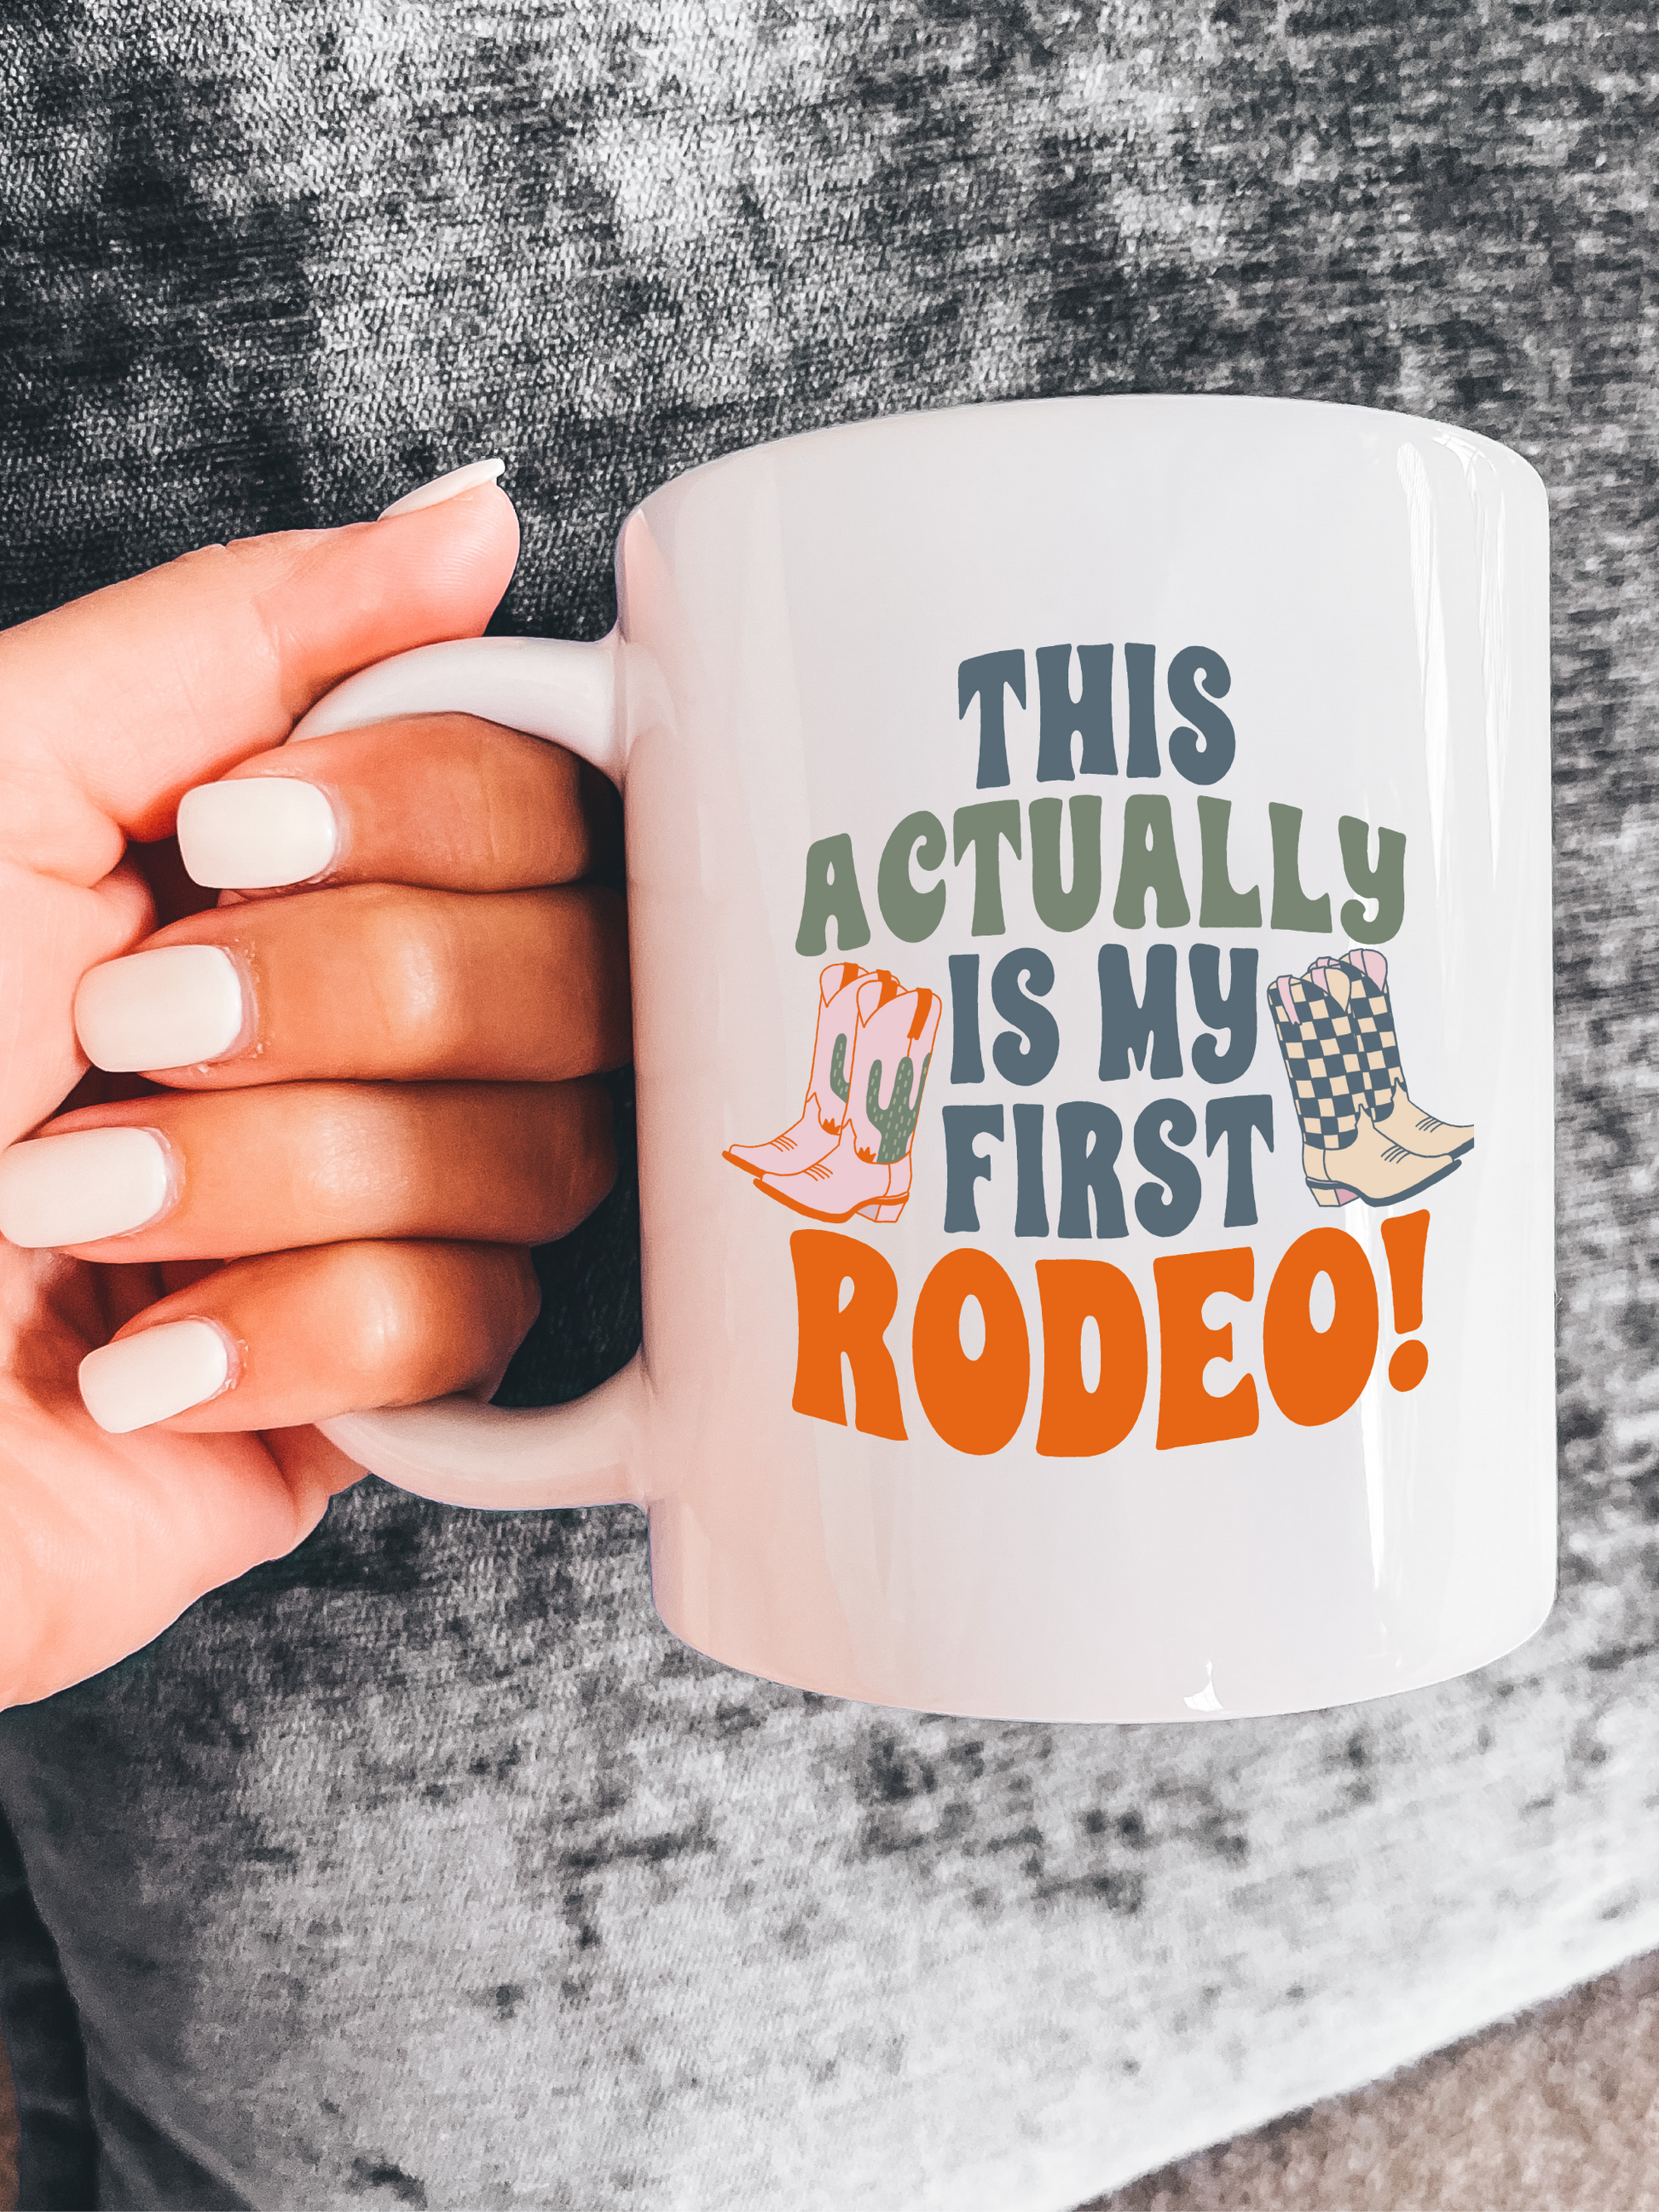 Rodeo Mug